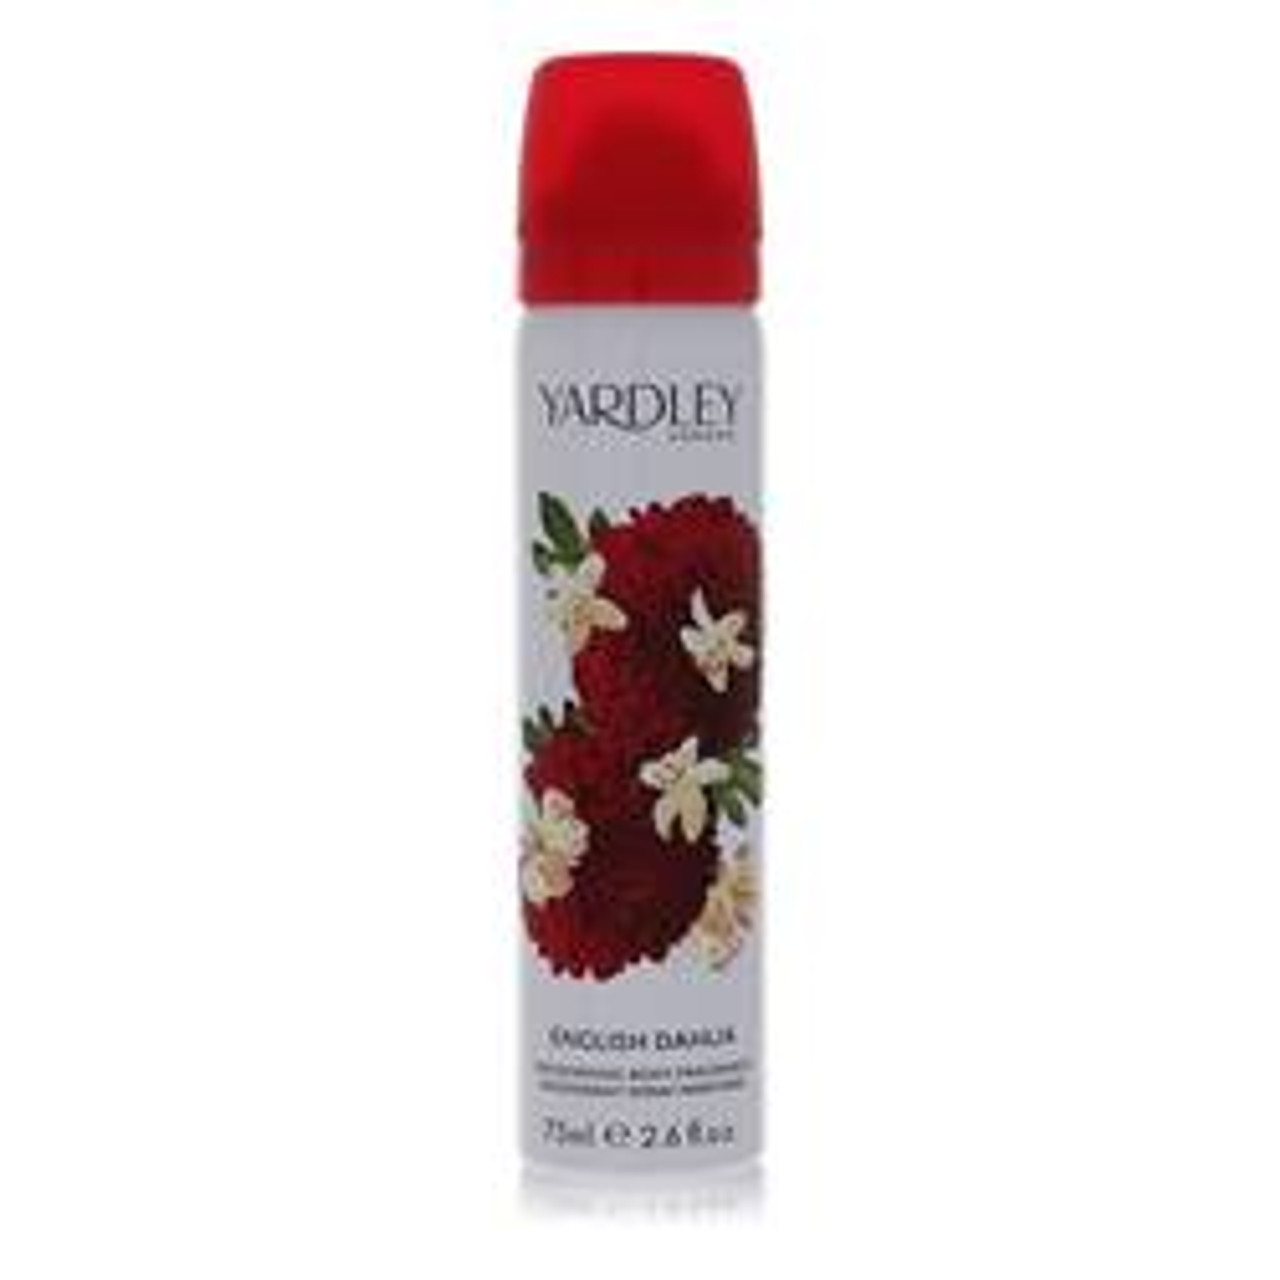 English Dahlia Perfume By Yardley London Body Spray 2.6 oz for Women - [From 23.00 - Choose pk Qty ] - *Ships from Miami